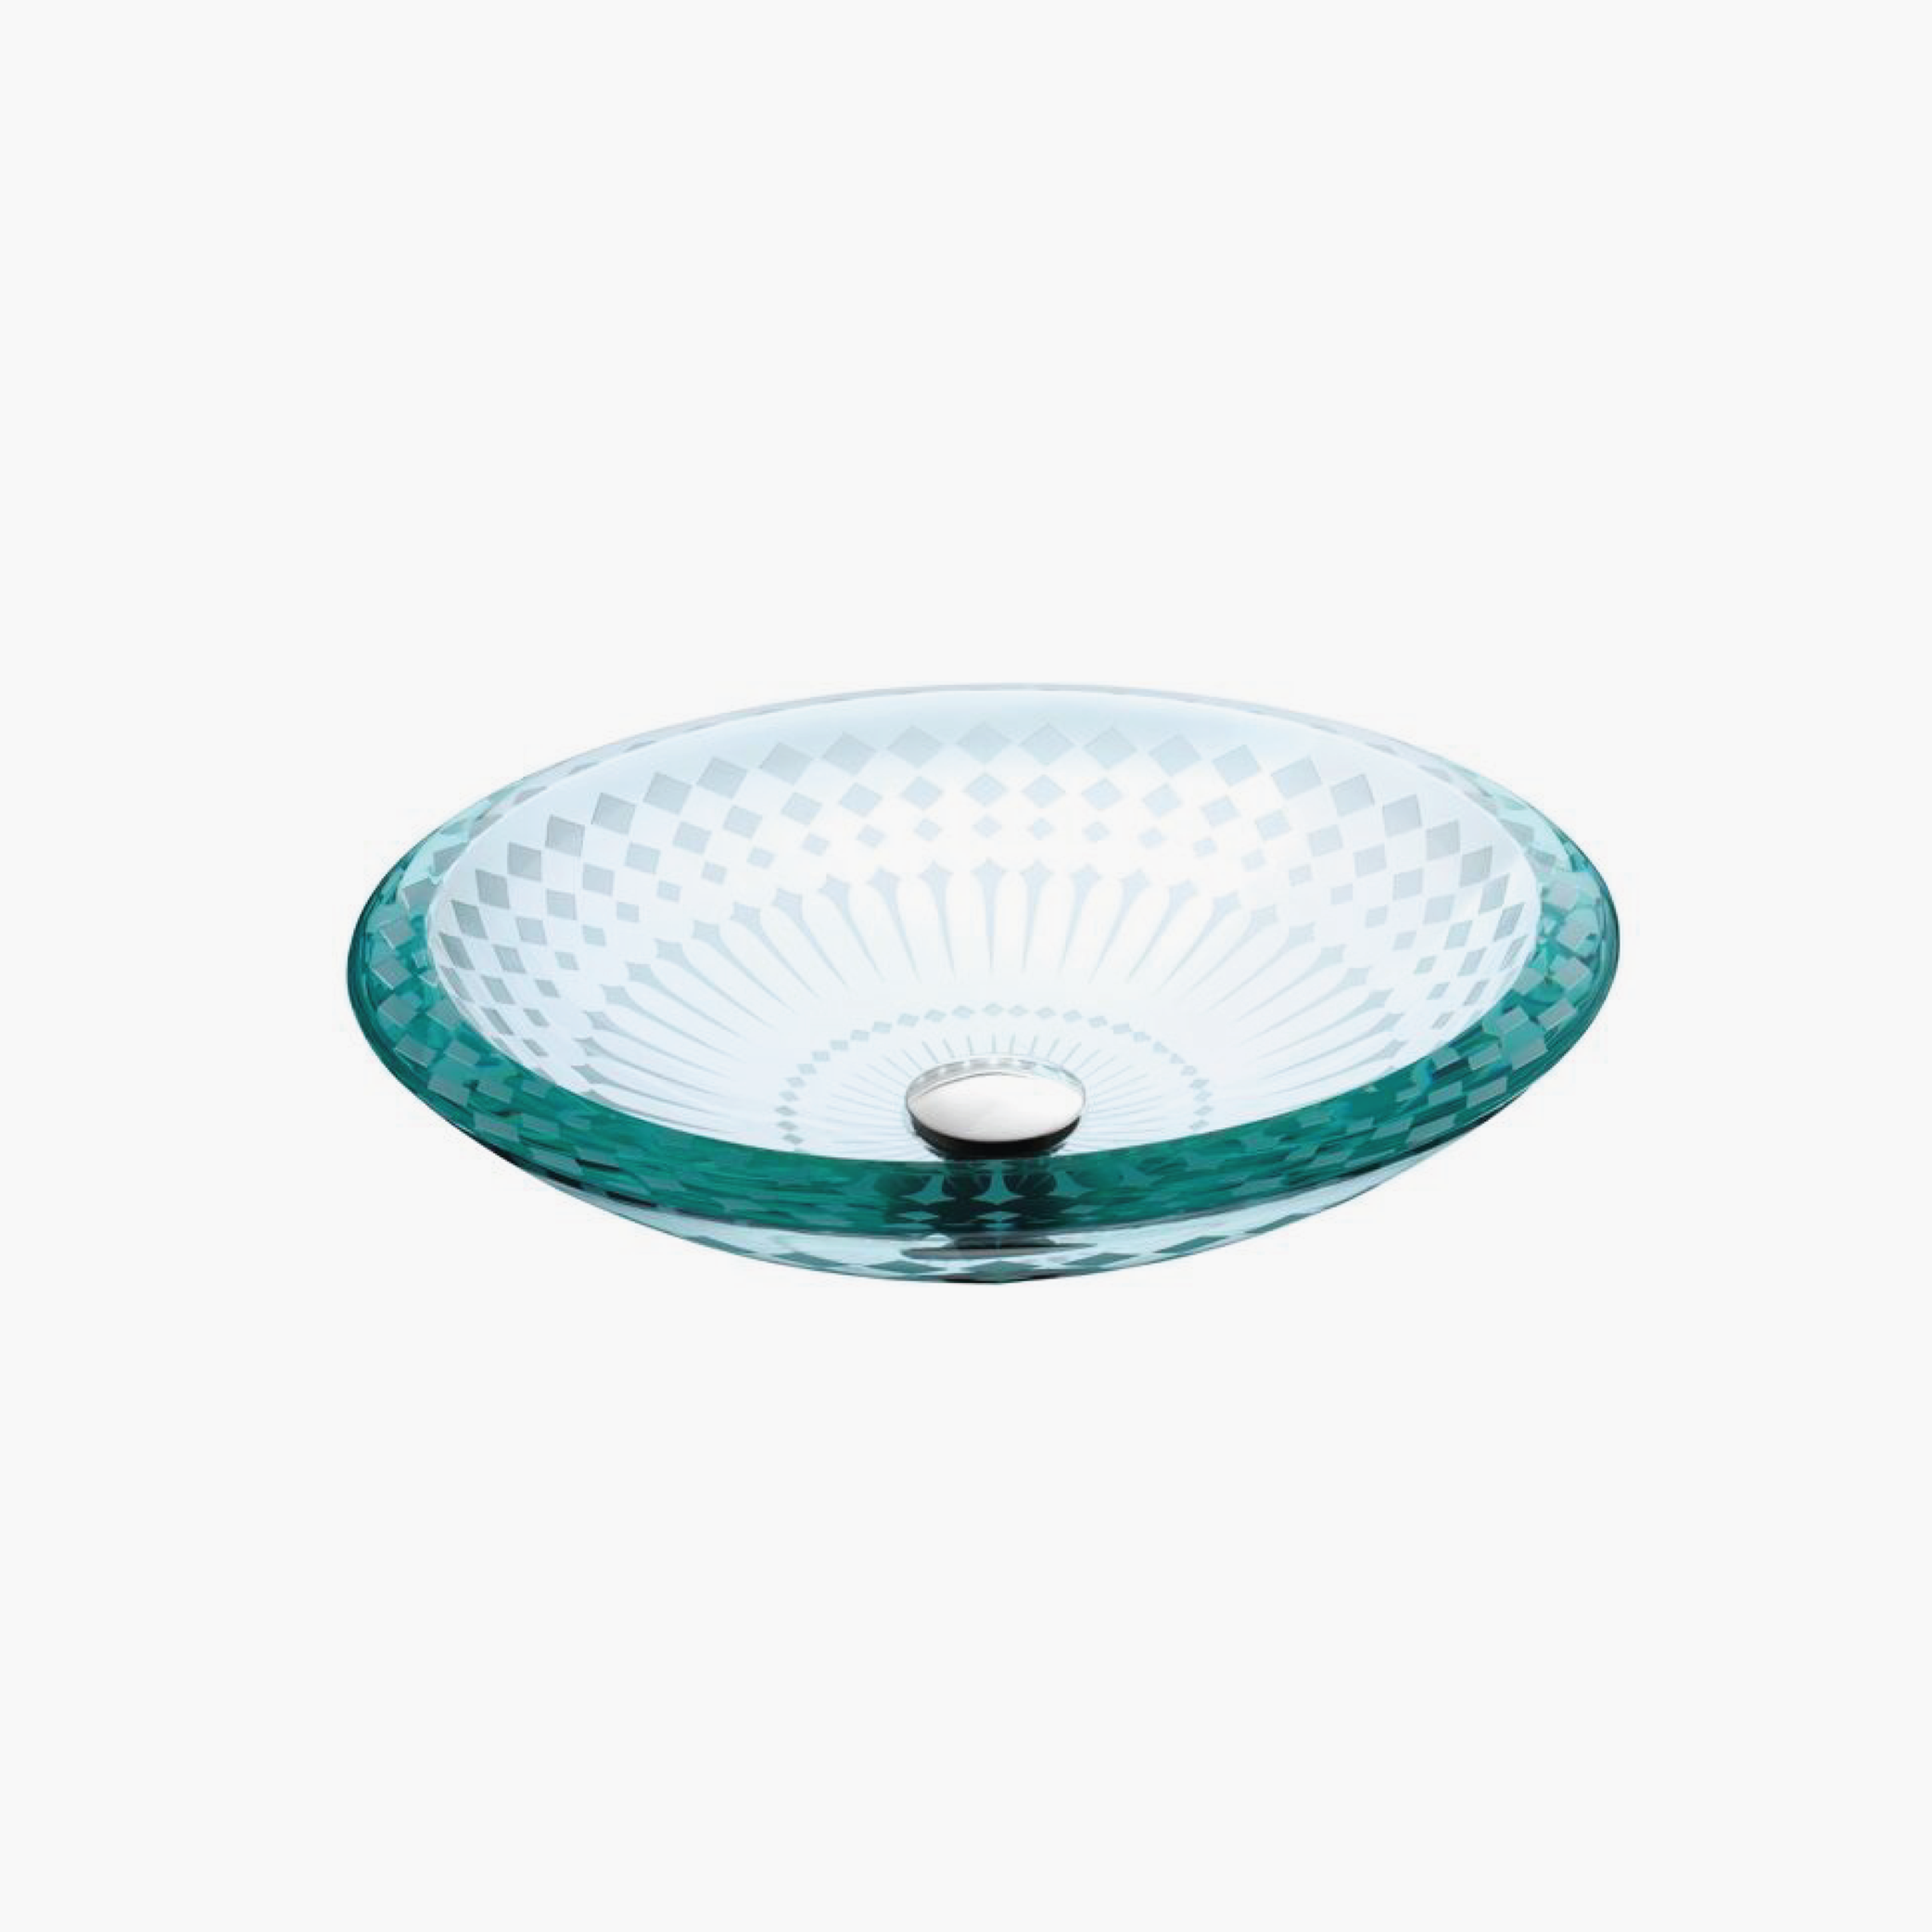 KBFMORE™ 16" Circular Luxury Clear Glass Vessel Bathroom Sink